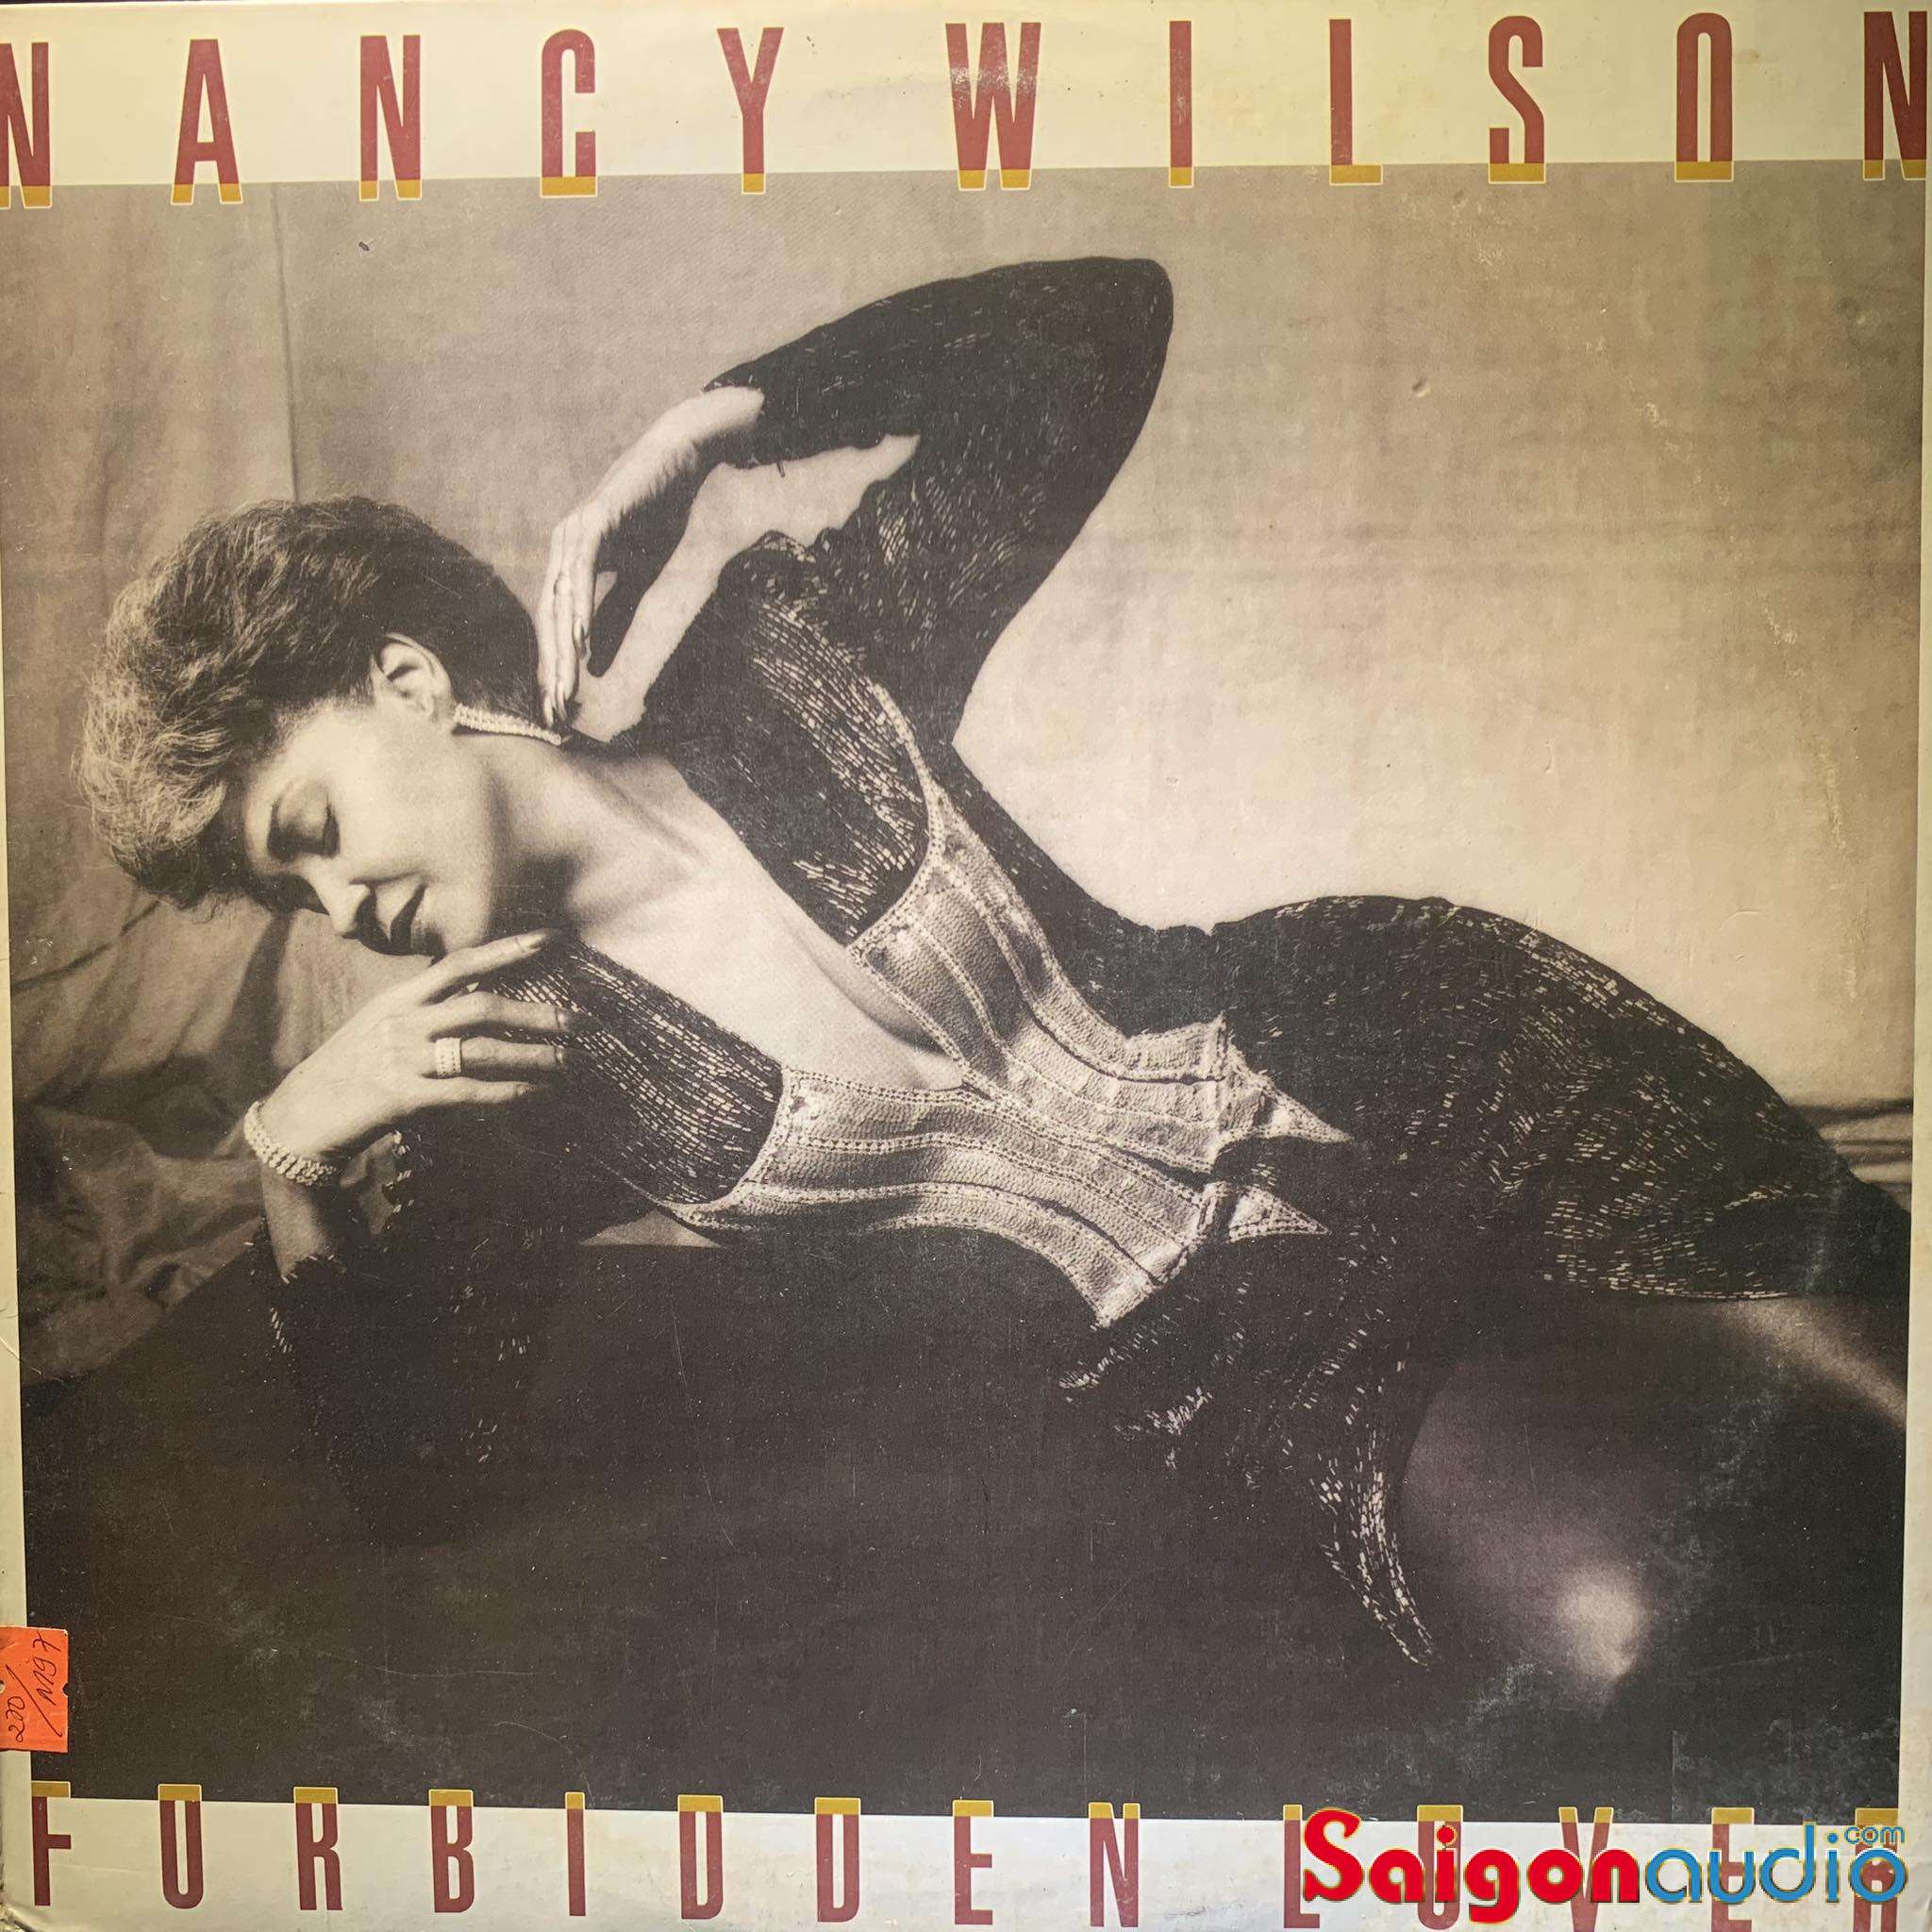 Đĩa than Nancy Wilson – Forbidden Lover | LP Vinyl Records